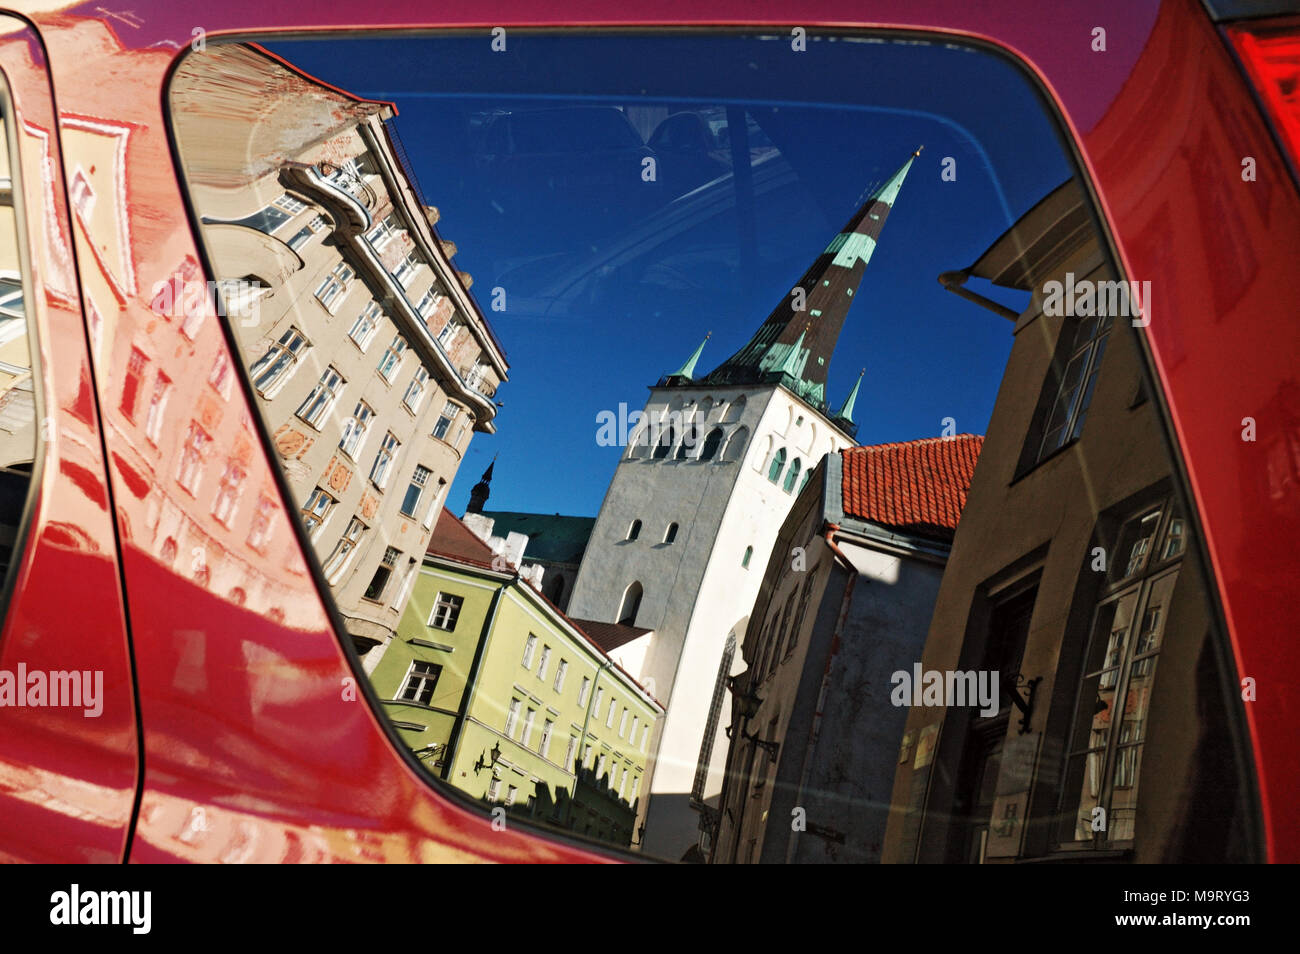 St. Olaf's Church reflected in a car window in Tallinn, Estonia Stock Photo